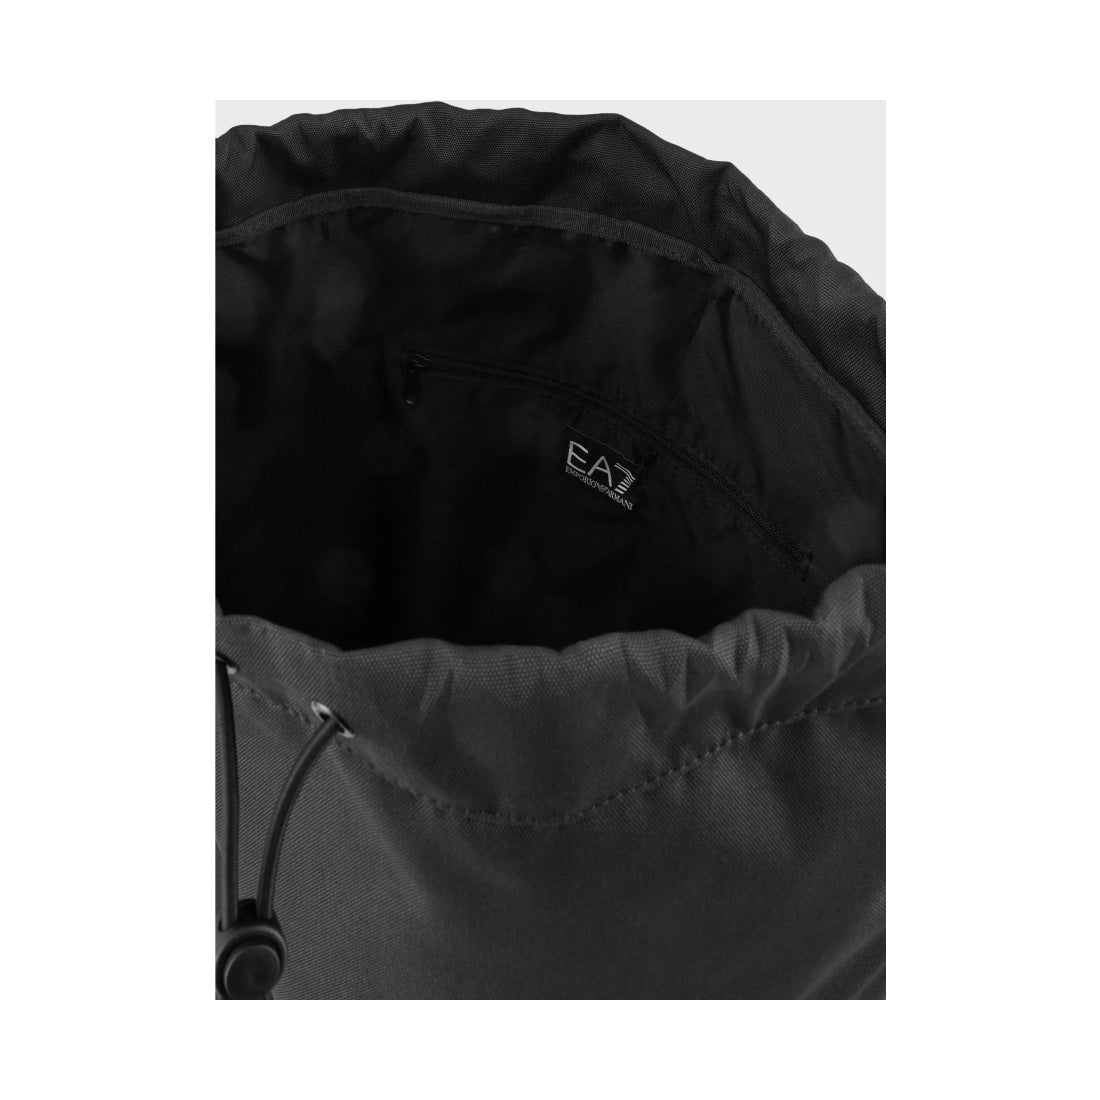 EA7 unisex adults black white logo casual shoulder bag | Vilbury London